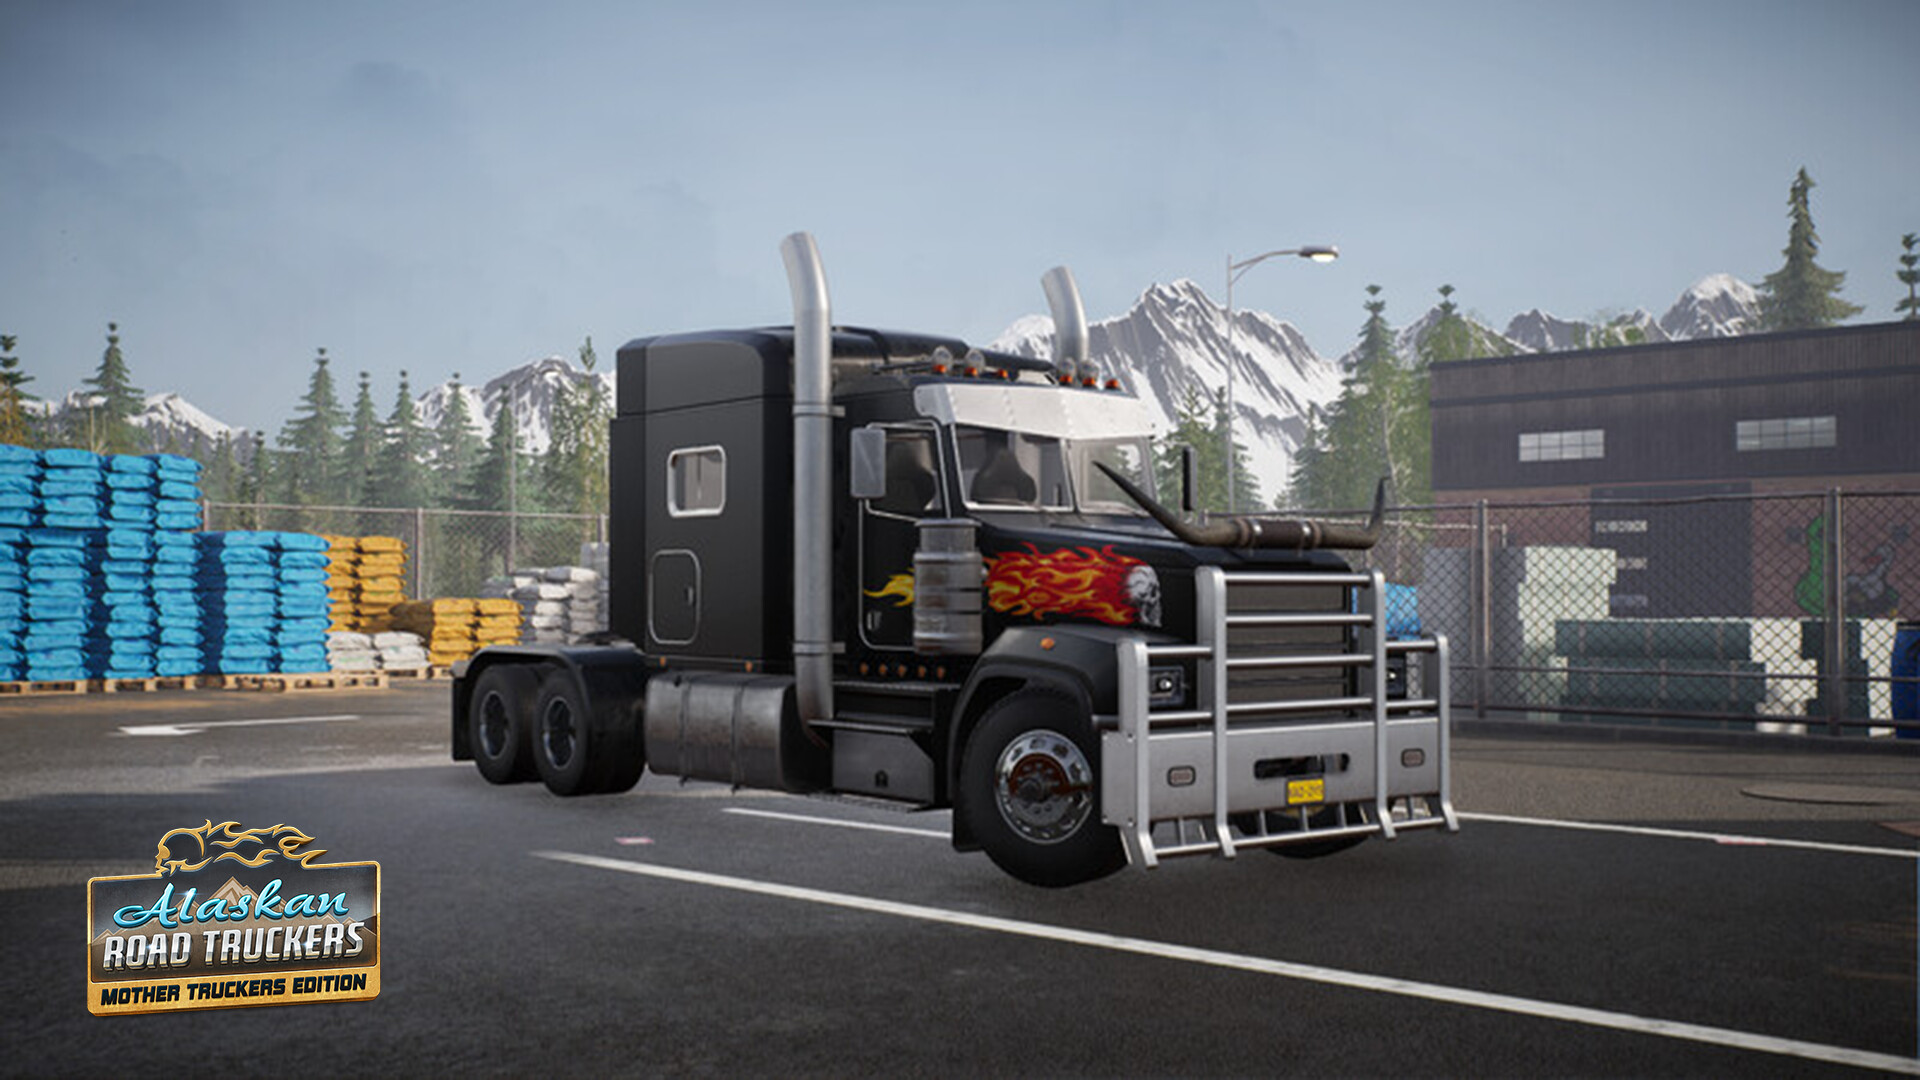 Alaskan Road Truckers Steam on